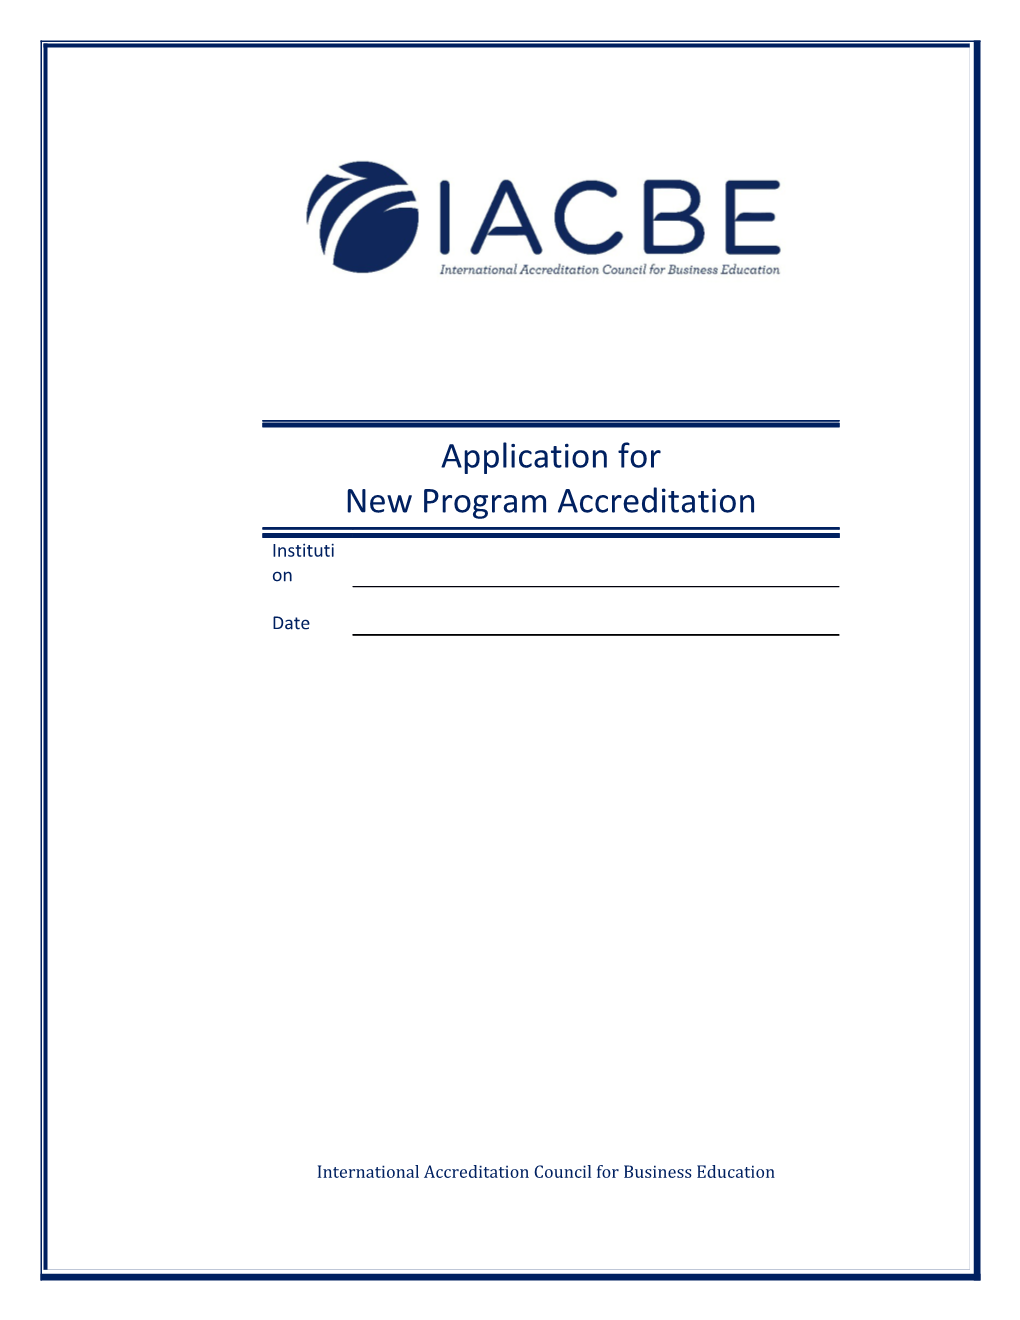 Application for New Program Accreditation